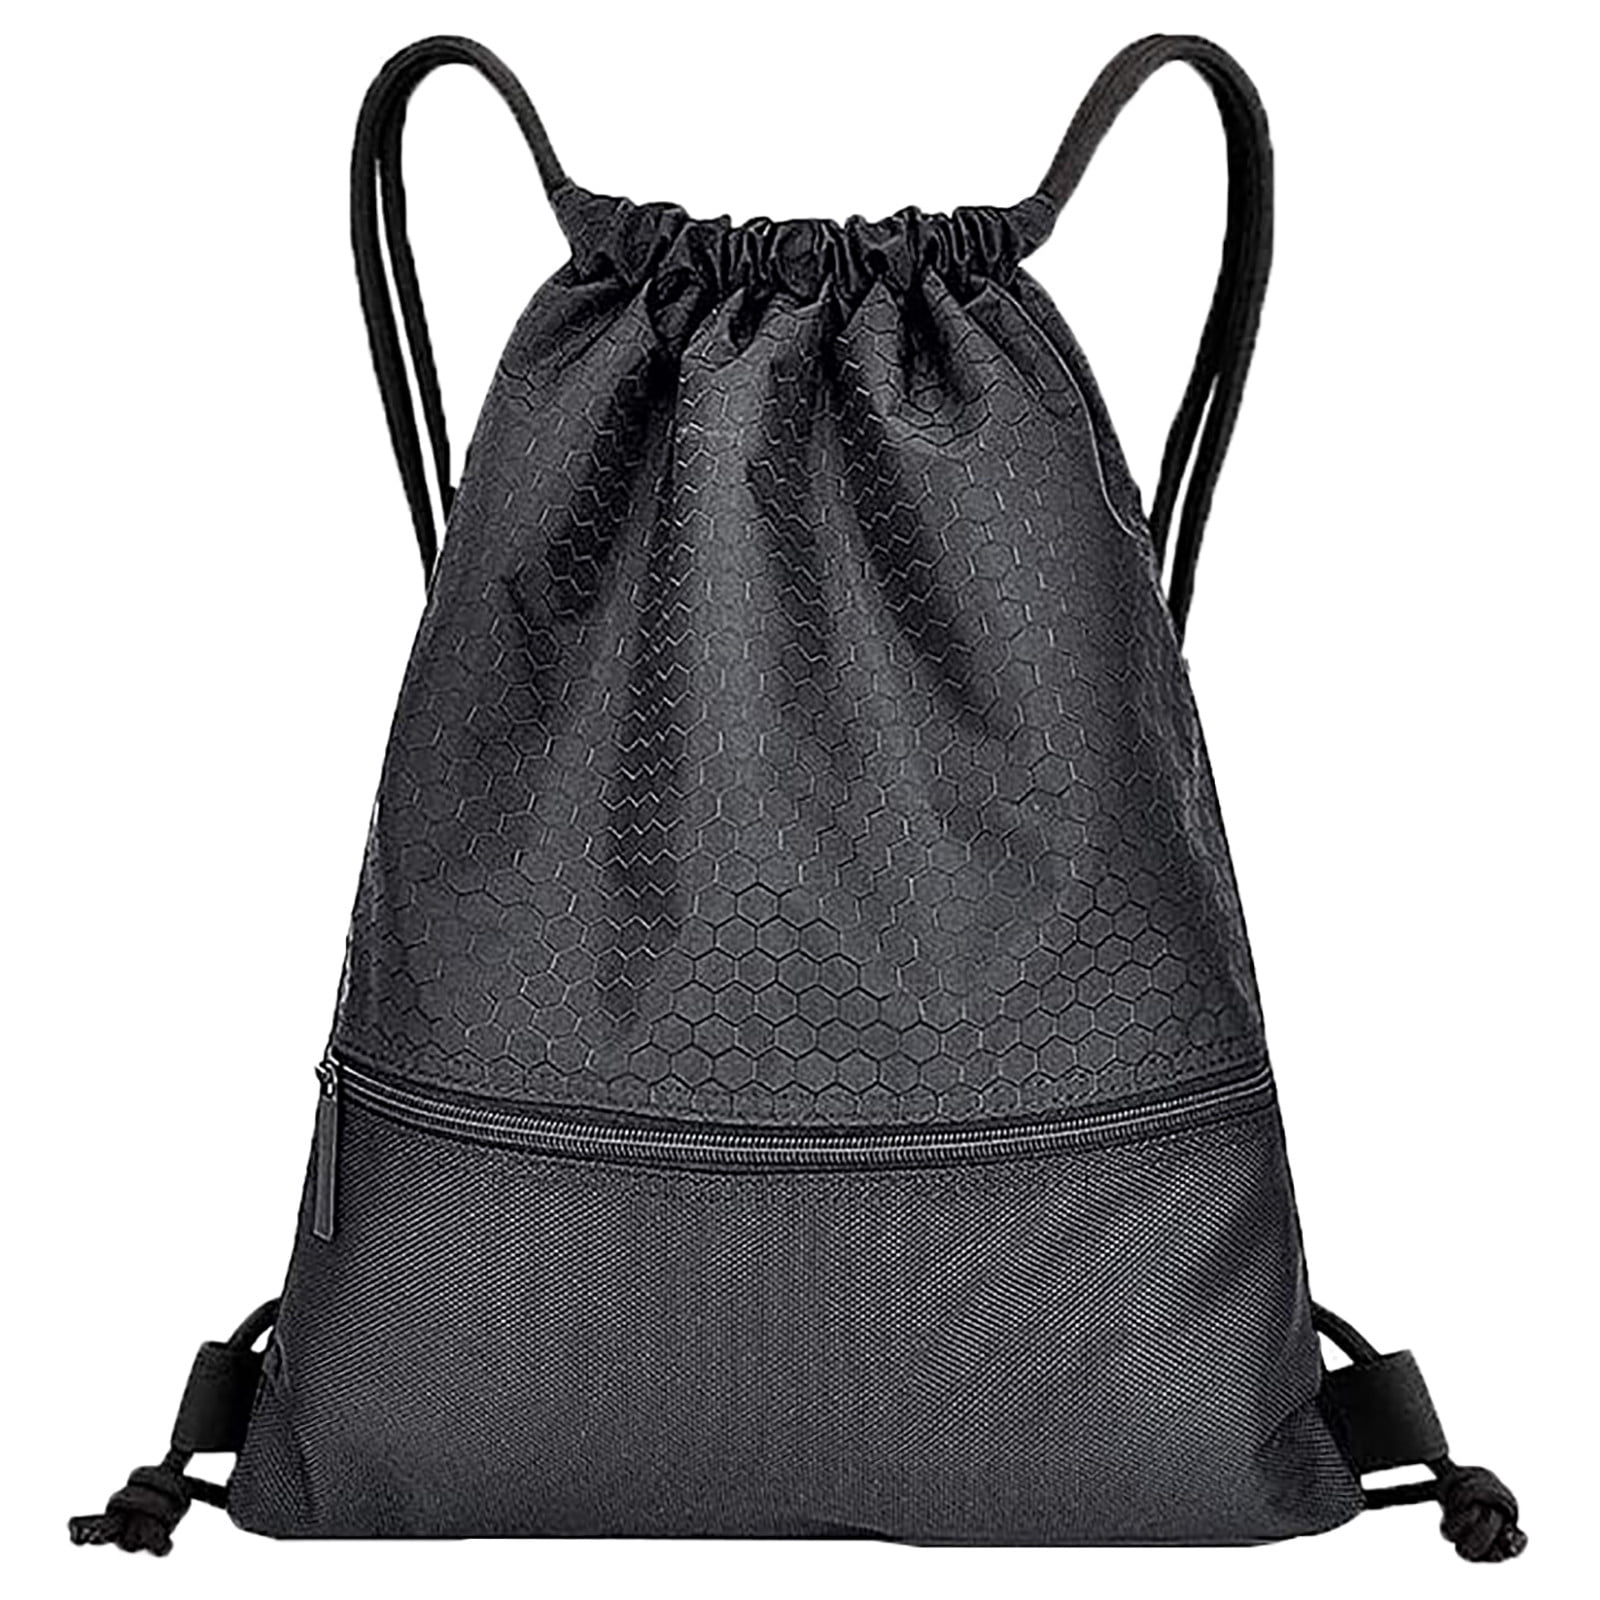 Rucksack School Gym Travel Trip Swim PE Waterproof Drawstring Bag 